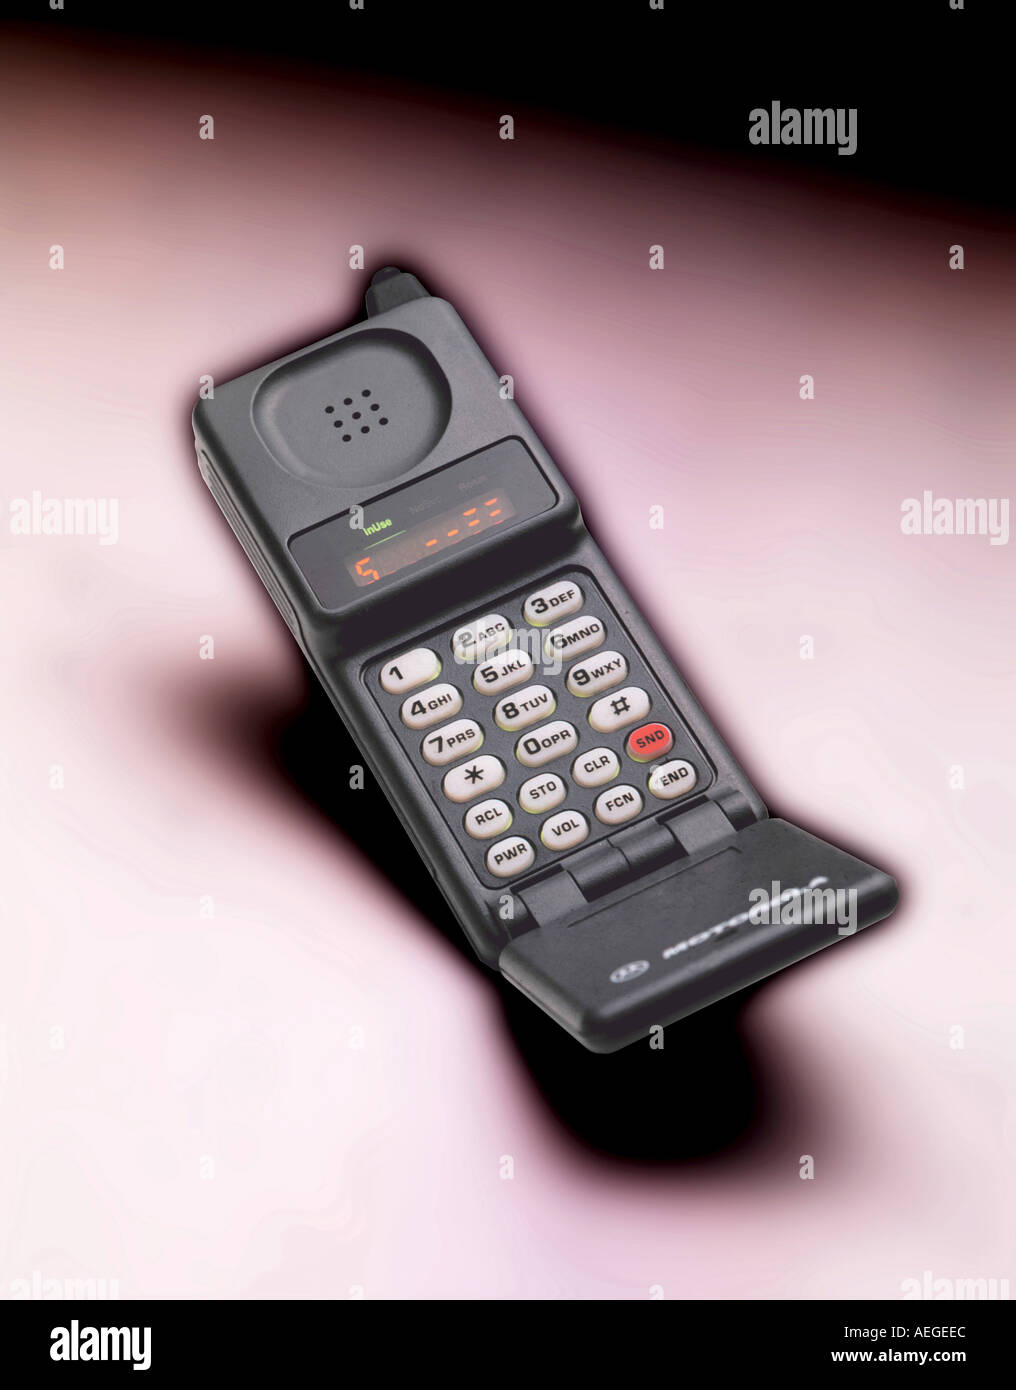 Mobilfunk Handy mobile Motorola veraltete Büromodell flip Tastatur Tasten Gespräch drahtlose konzeptionelle Fernkommunikation Stockfoto